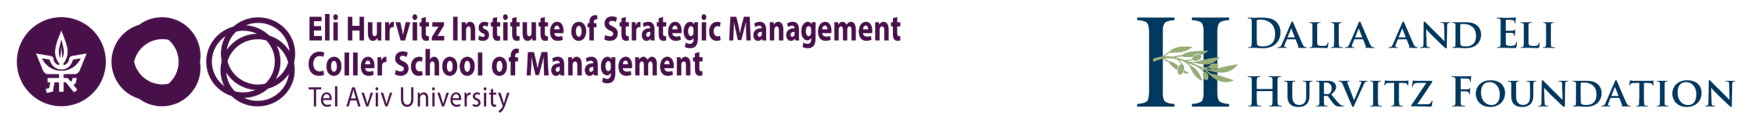 Eli Hurvitz Institute for Strategic Management Mobile Logo